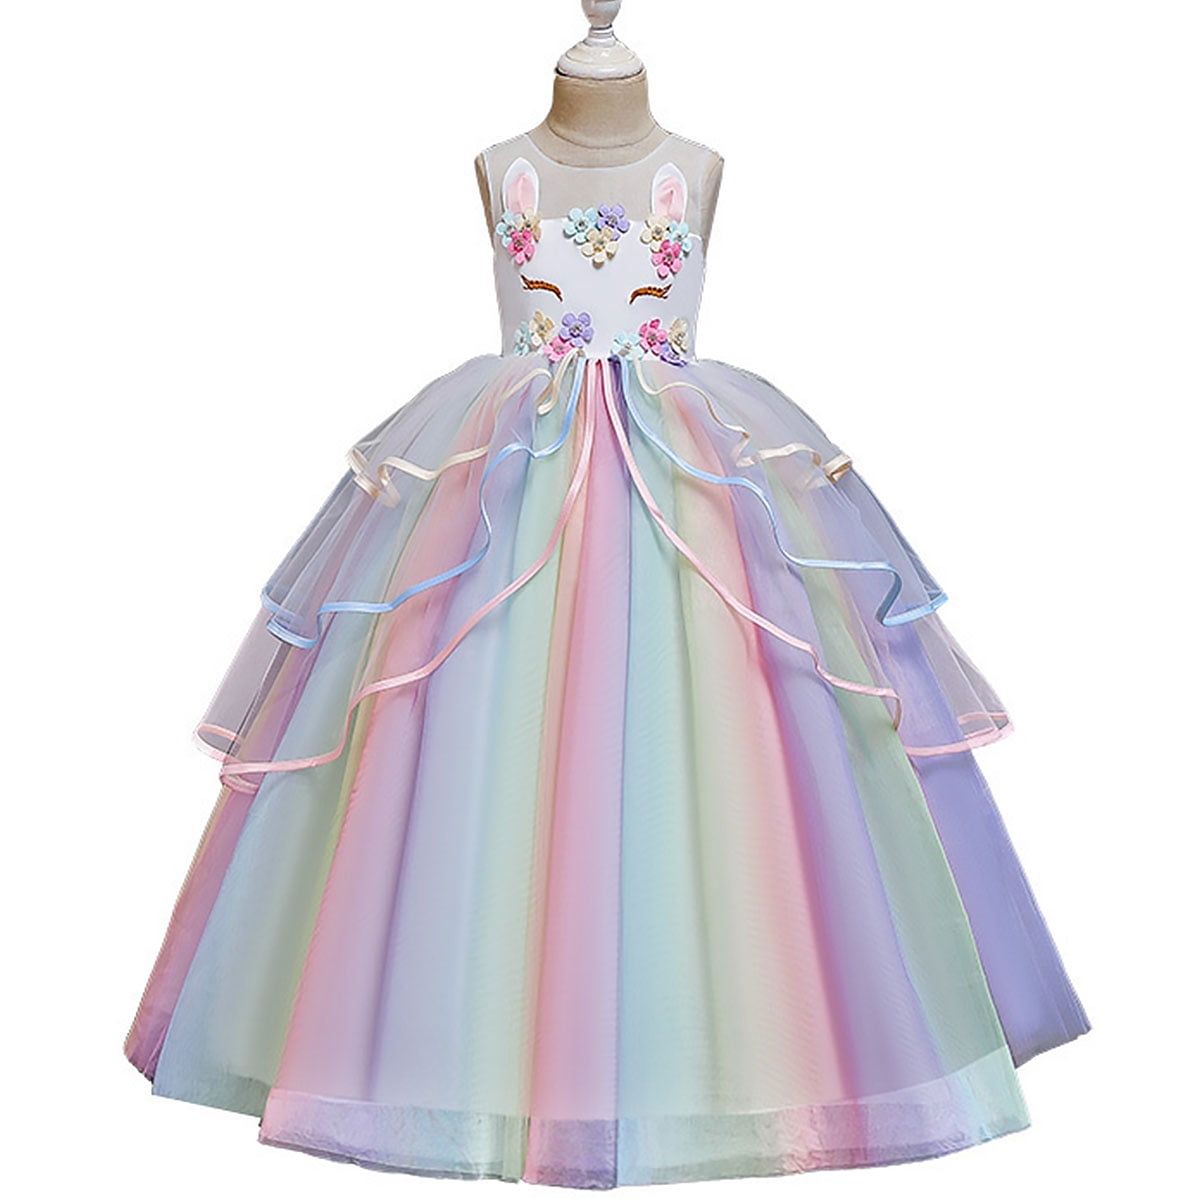 Eledobby Girls Dress Unicorn Princess Dress Costume Halloween Mesh Tulle Birthday Party Cosplay Dress Up Clothes